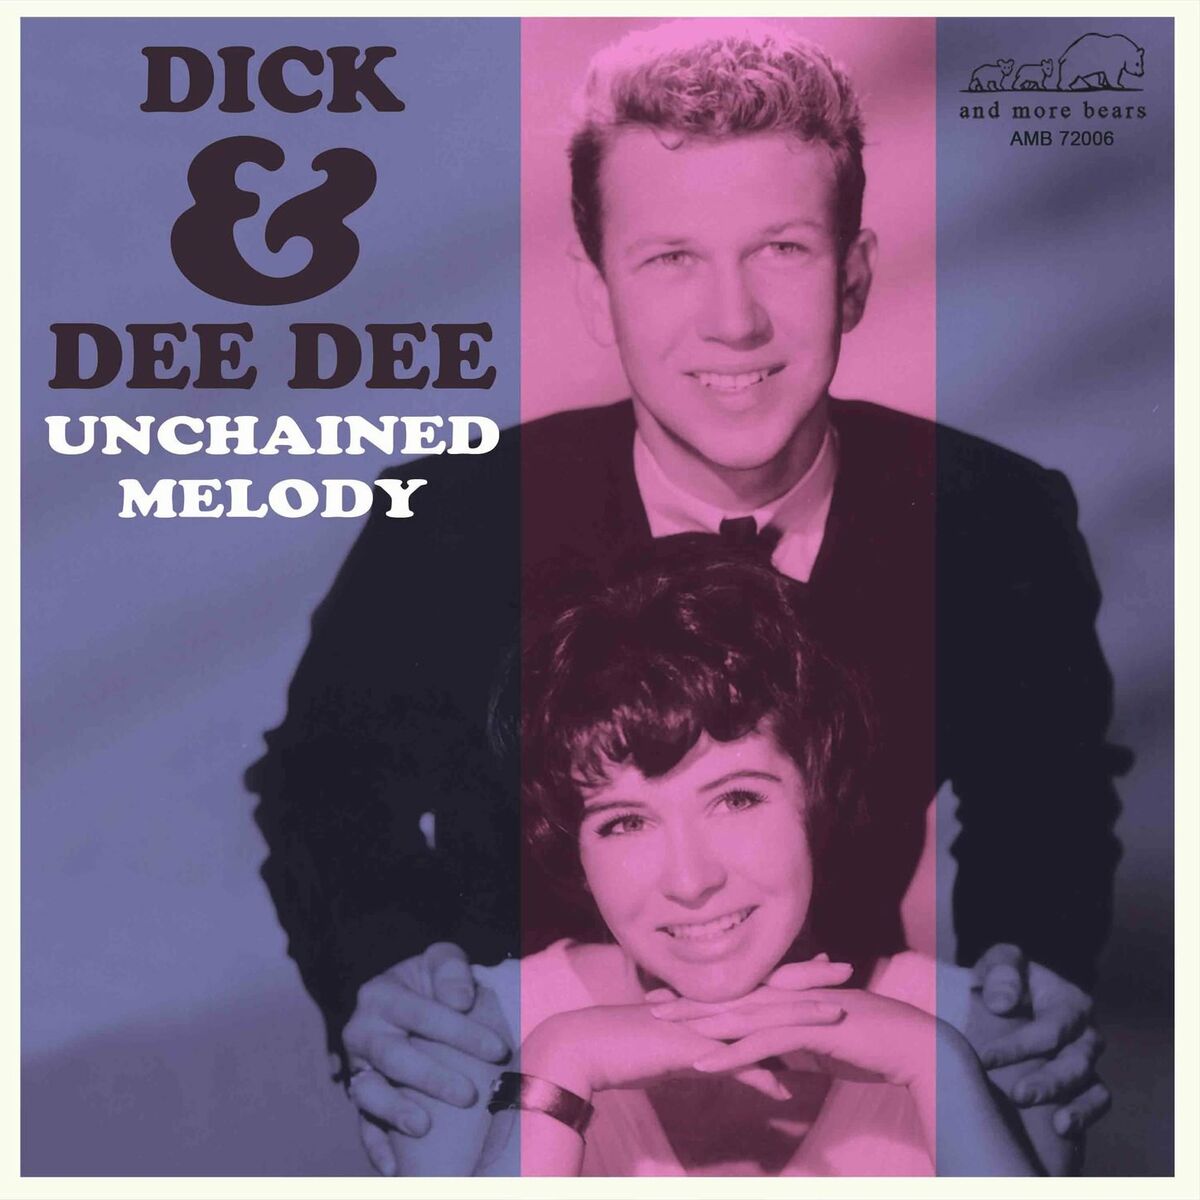 Dick u0026 Dee Dee: albums